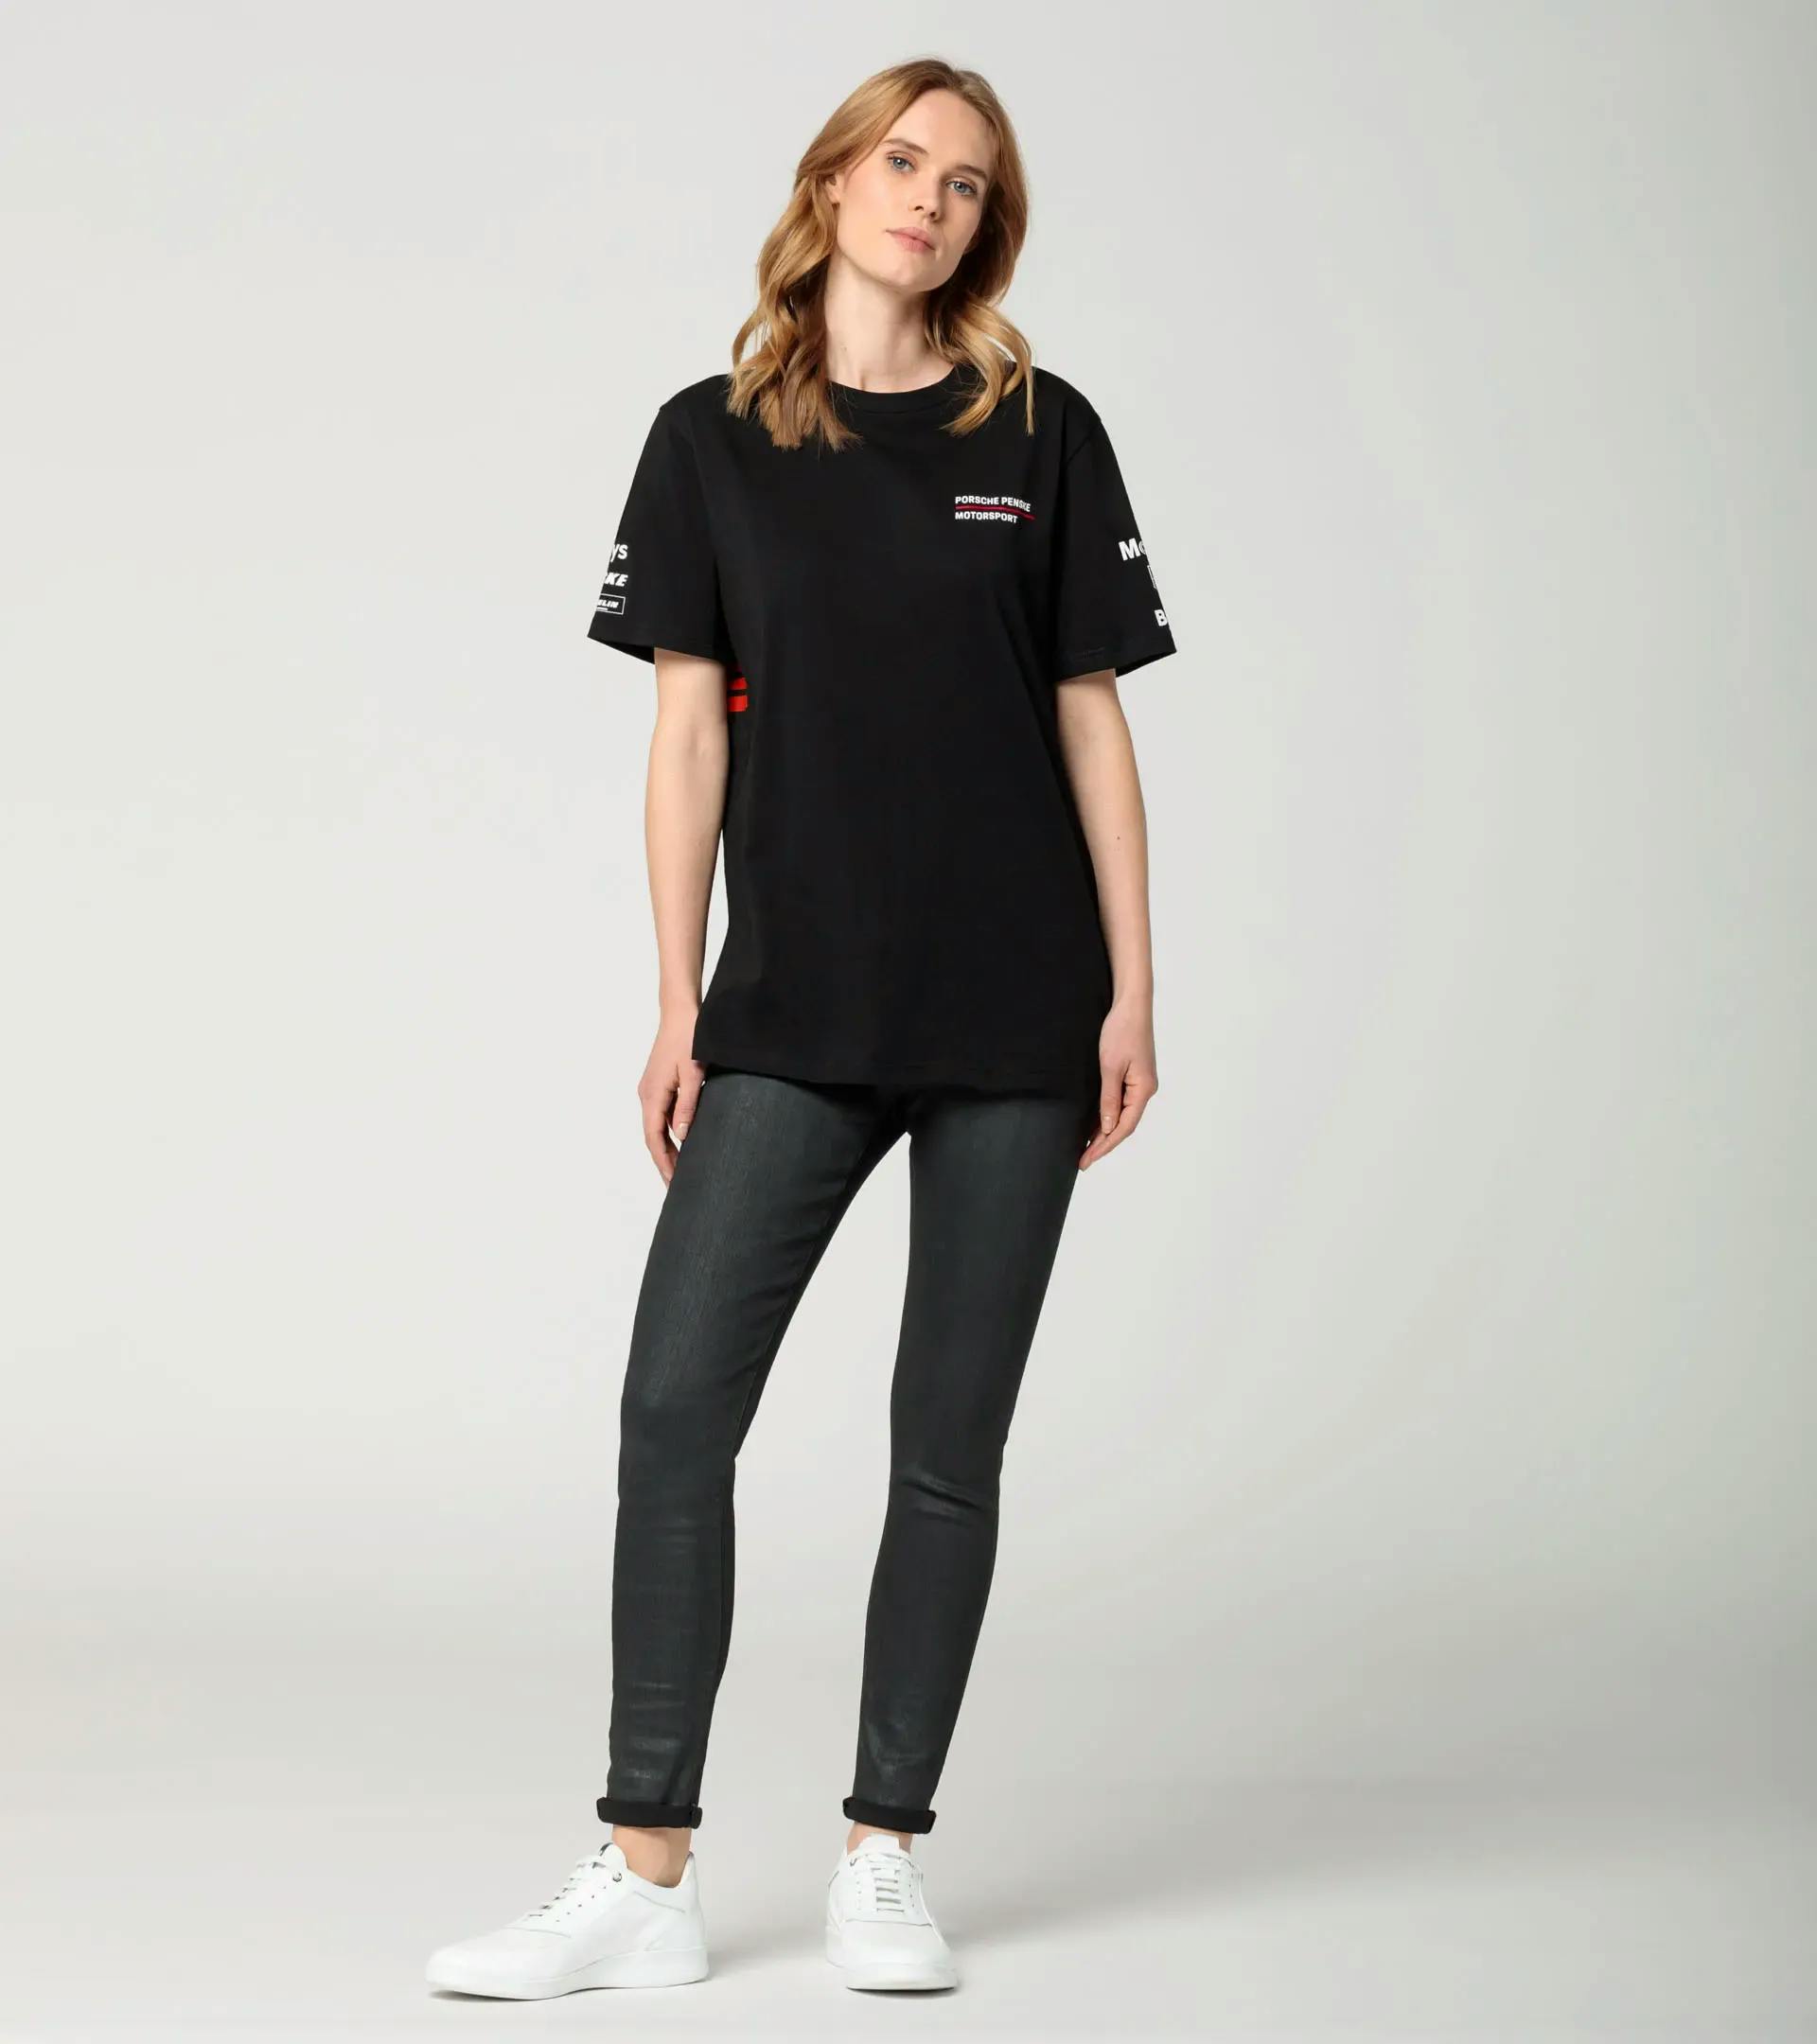 Camiseta unisex – Porsche Penske Motorsport 7